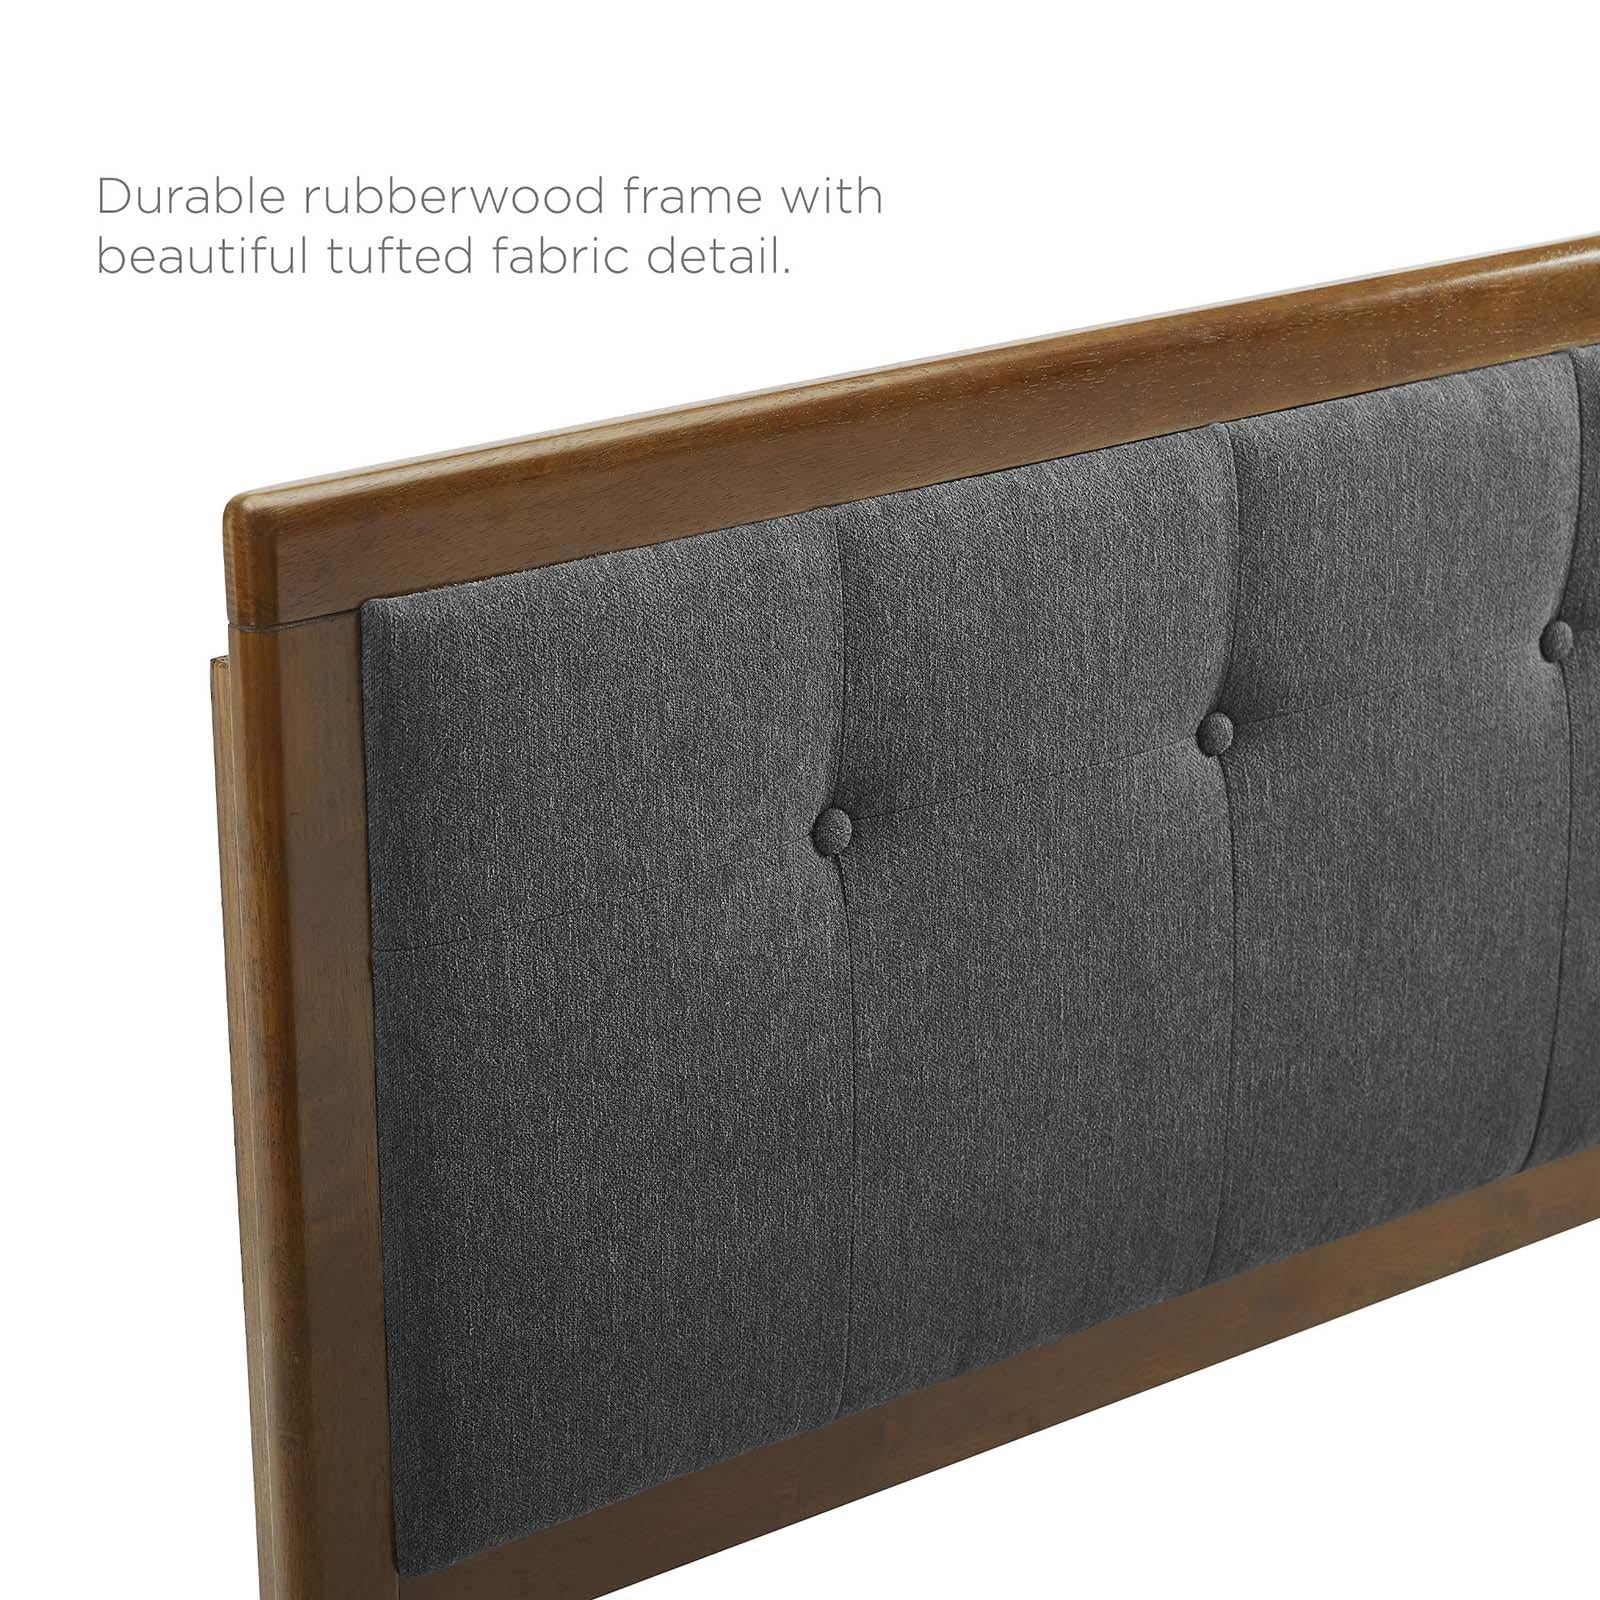 Modway Furniture Modern Willow Full Wood Platform Bed With Angular Frame - MOD-6634